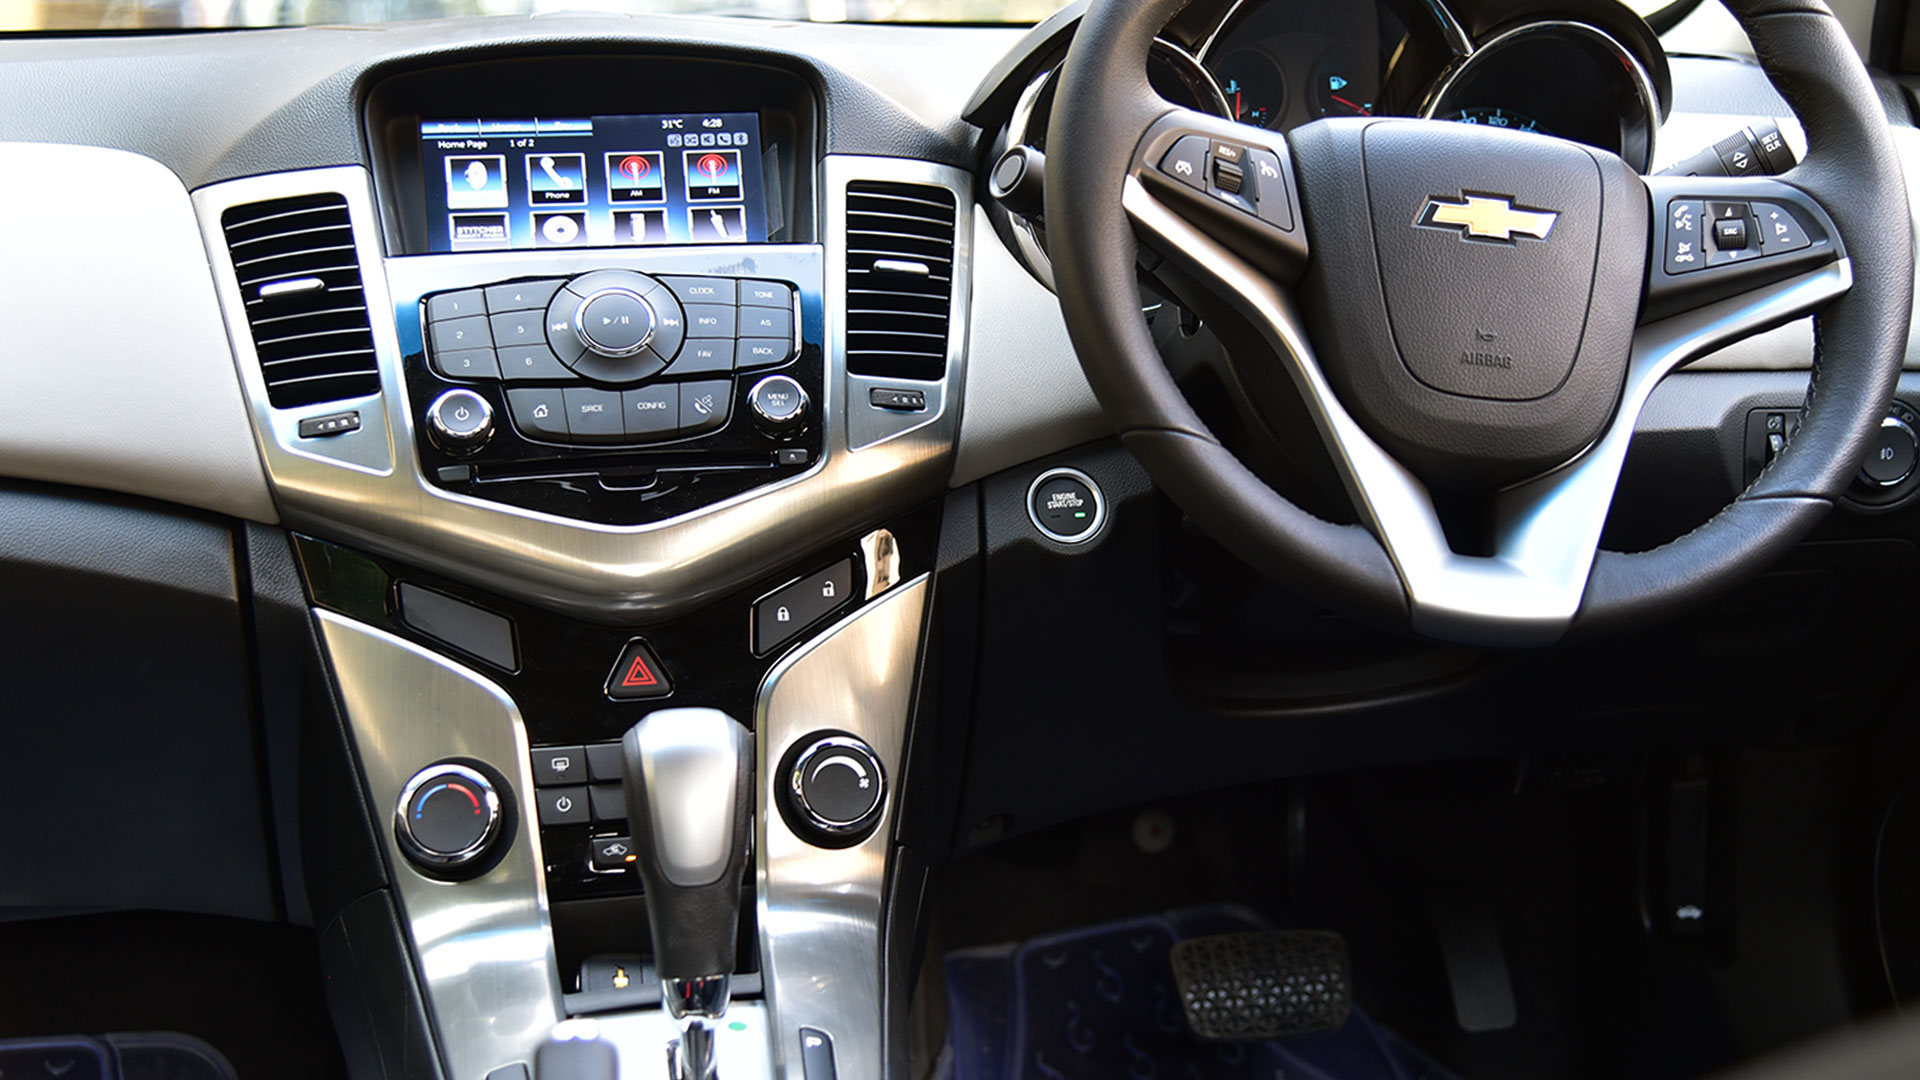 Chevrolet Cruze 2016 LTZ Interior